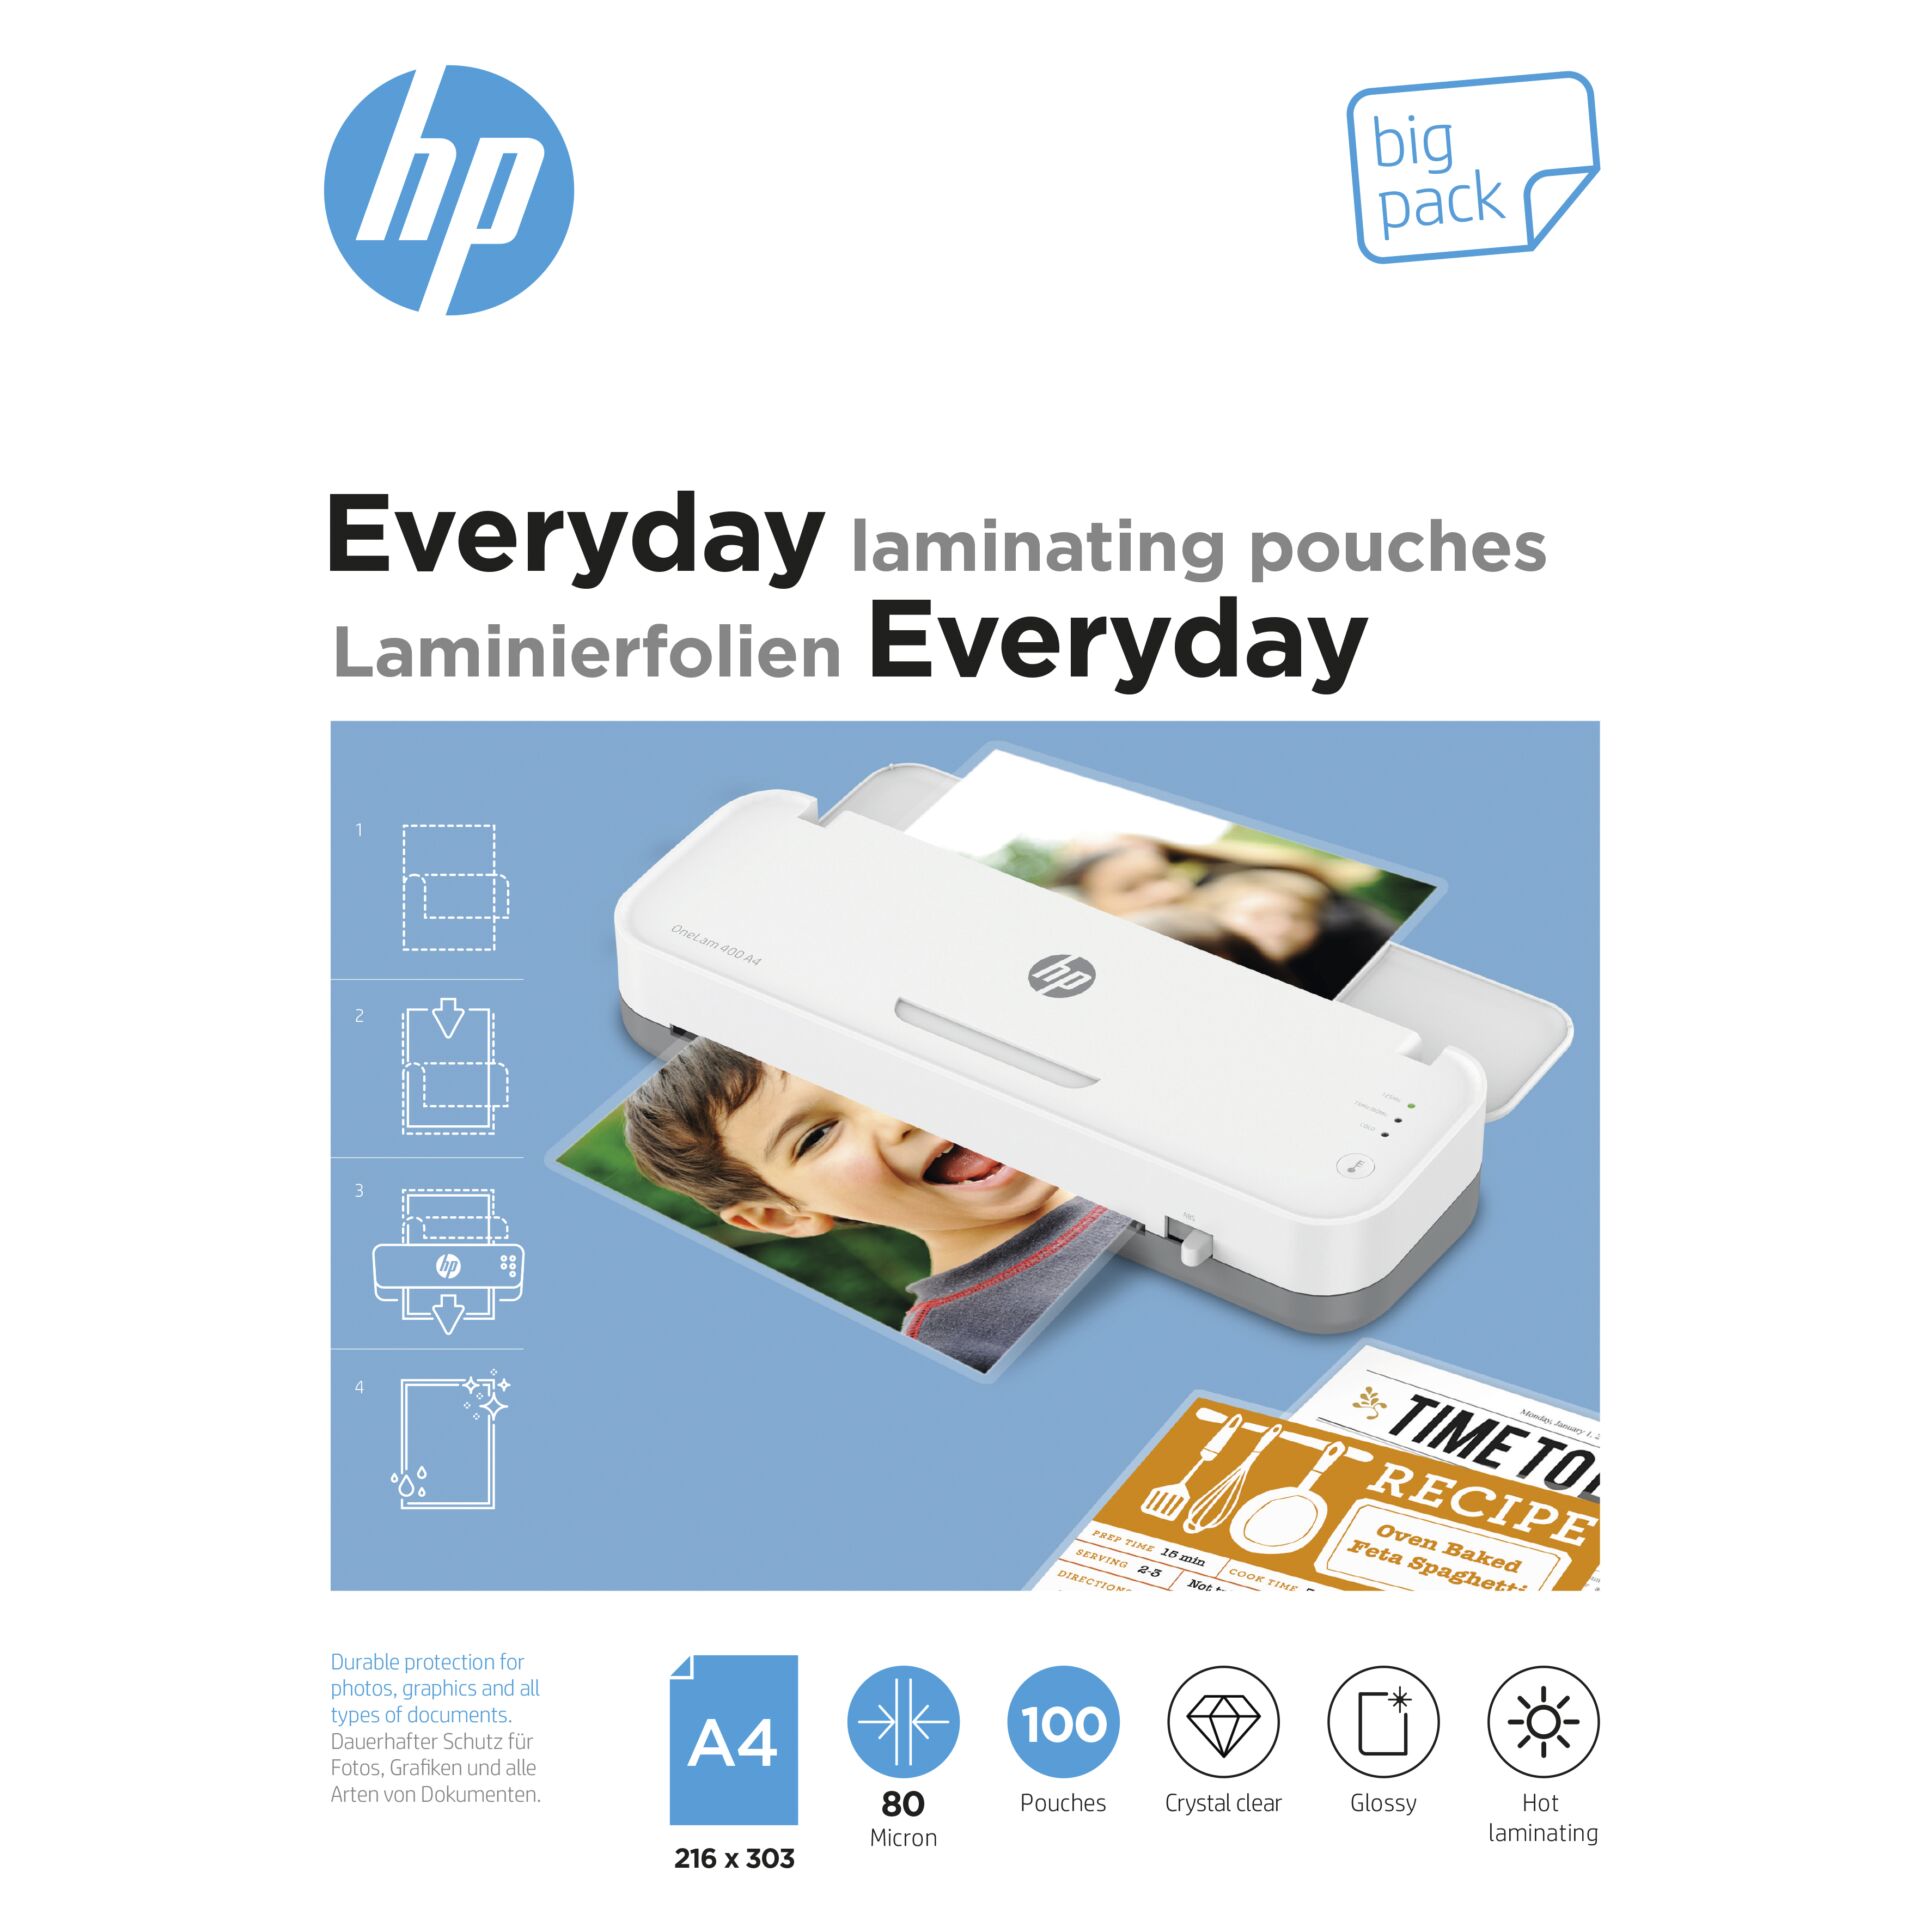 HP Laminierfolien Everyday A4 80 Micron 100x